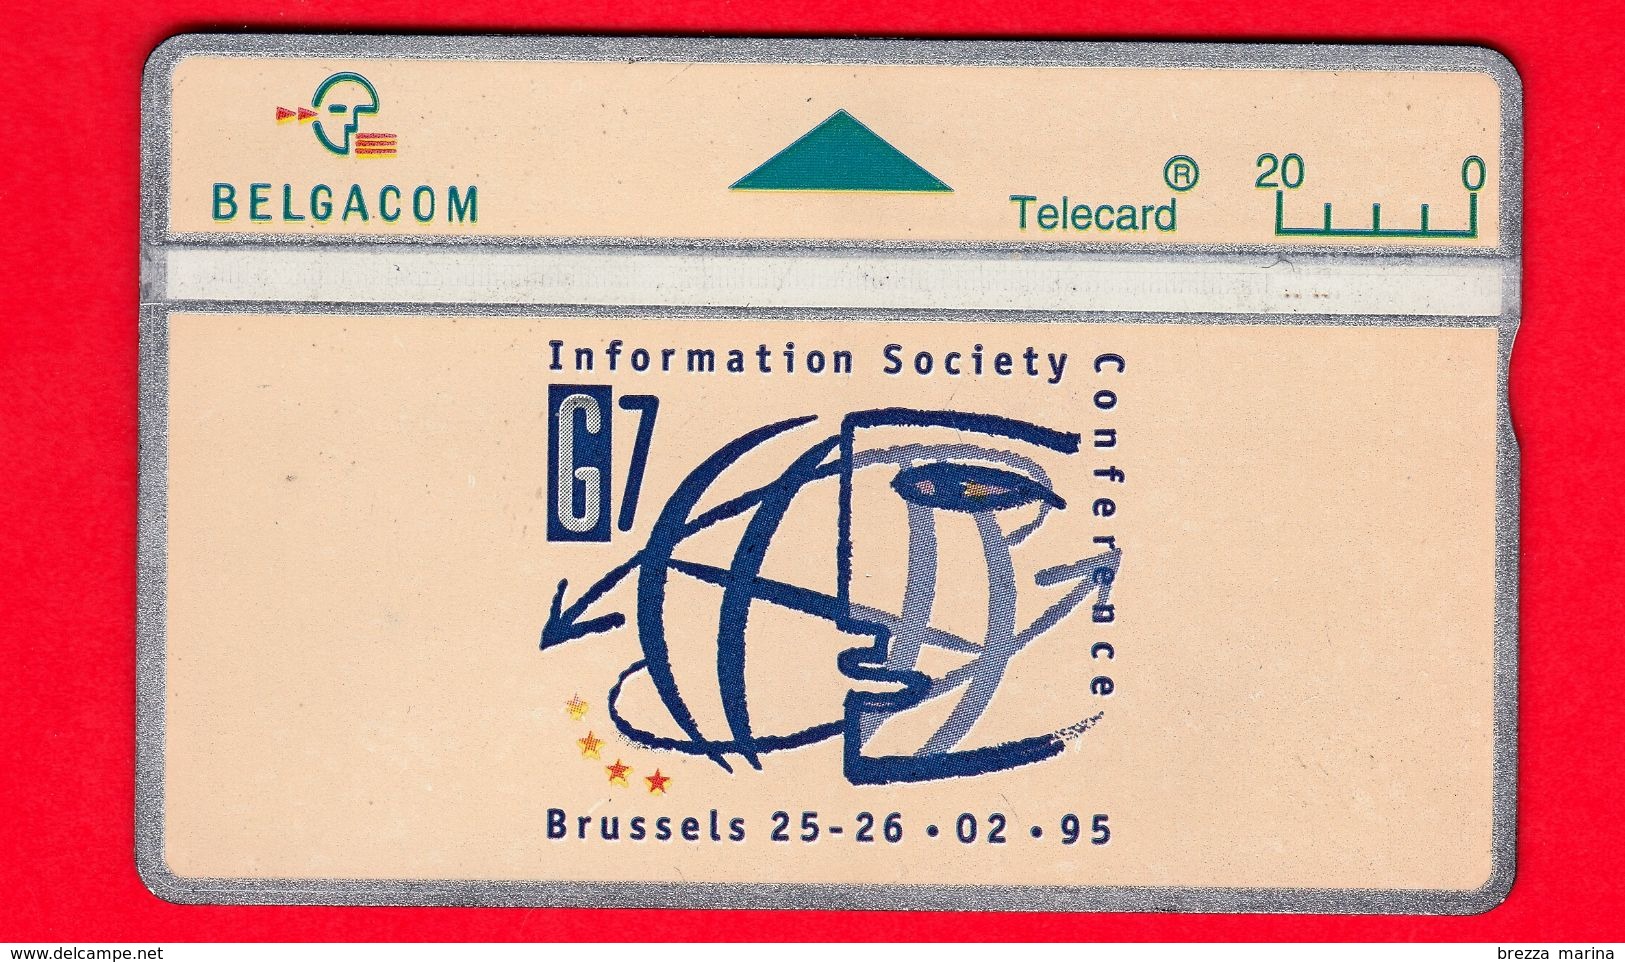 BELGIO - Scheda Telefonica - 1995 - Vertice G7 - L&G Pubblicitarie E Speciali Belgacom - 20 - Senza Chip